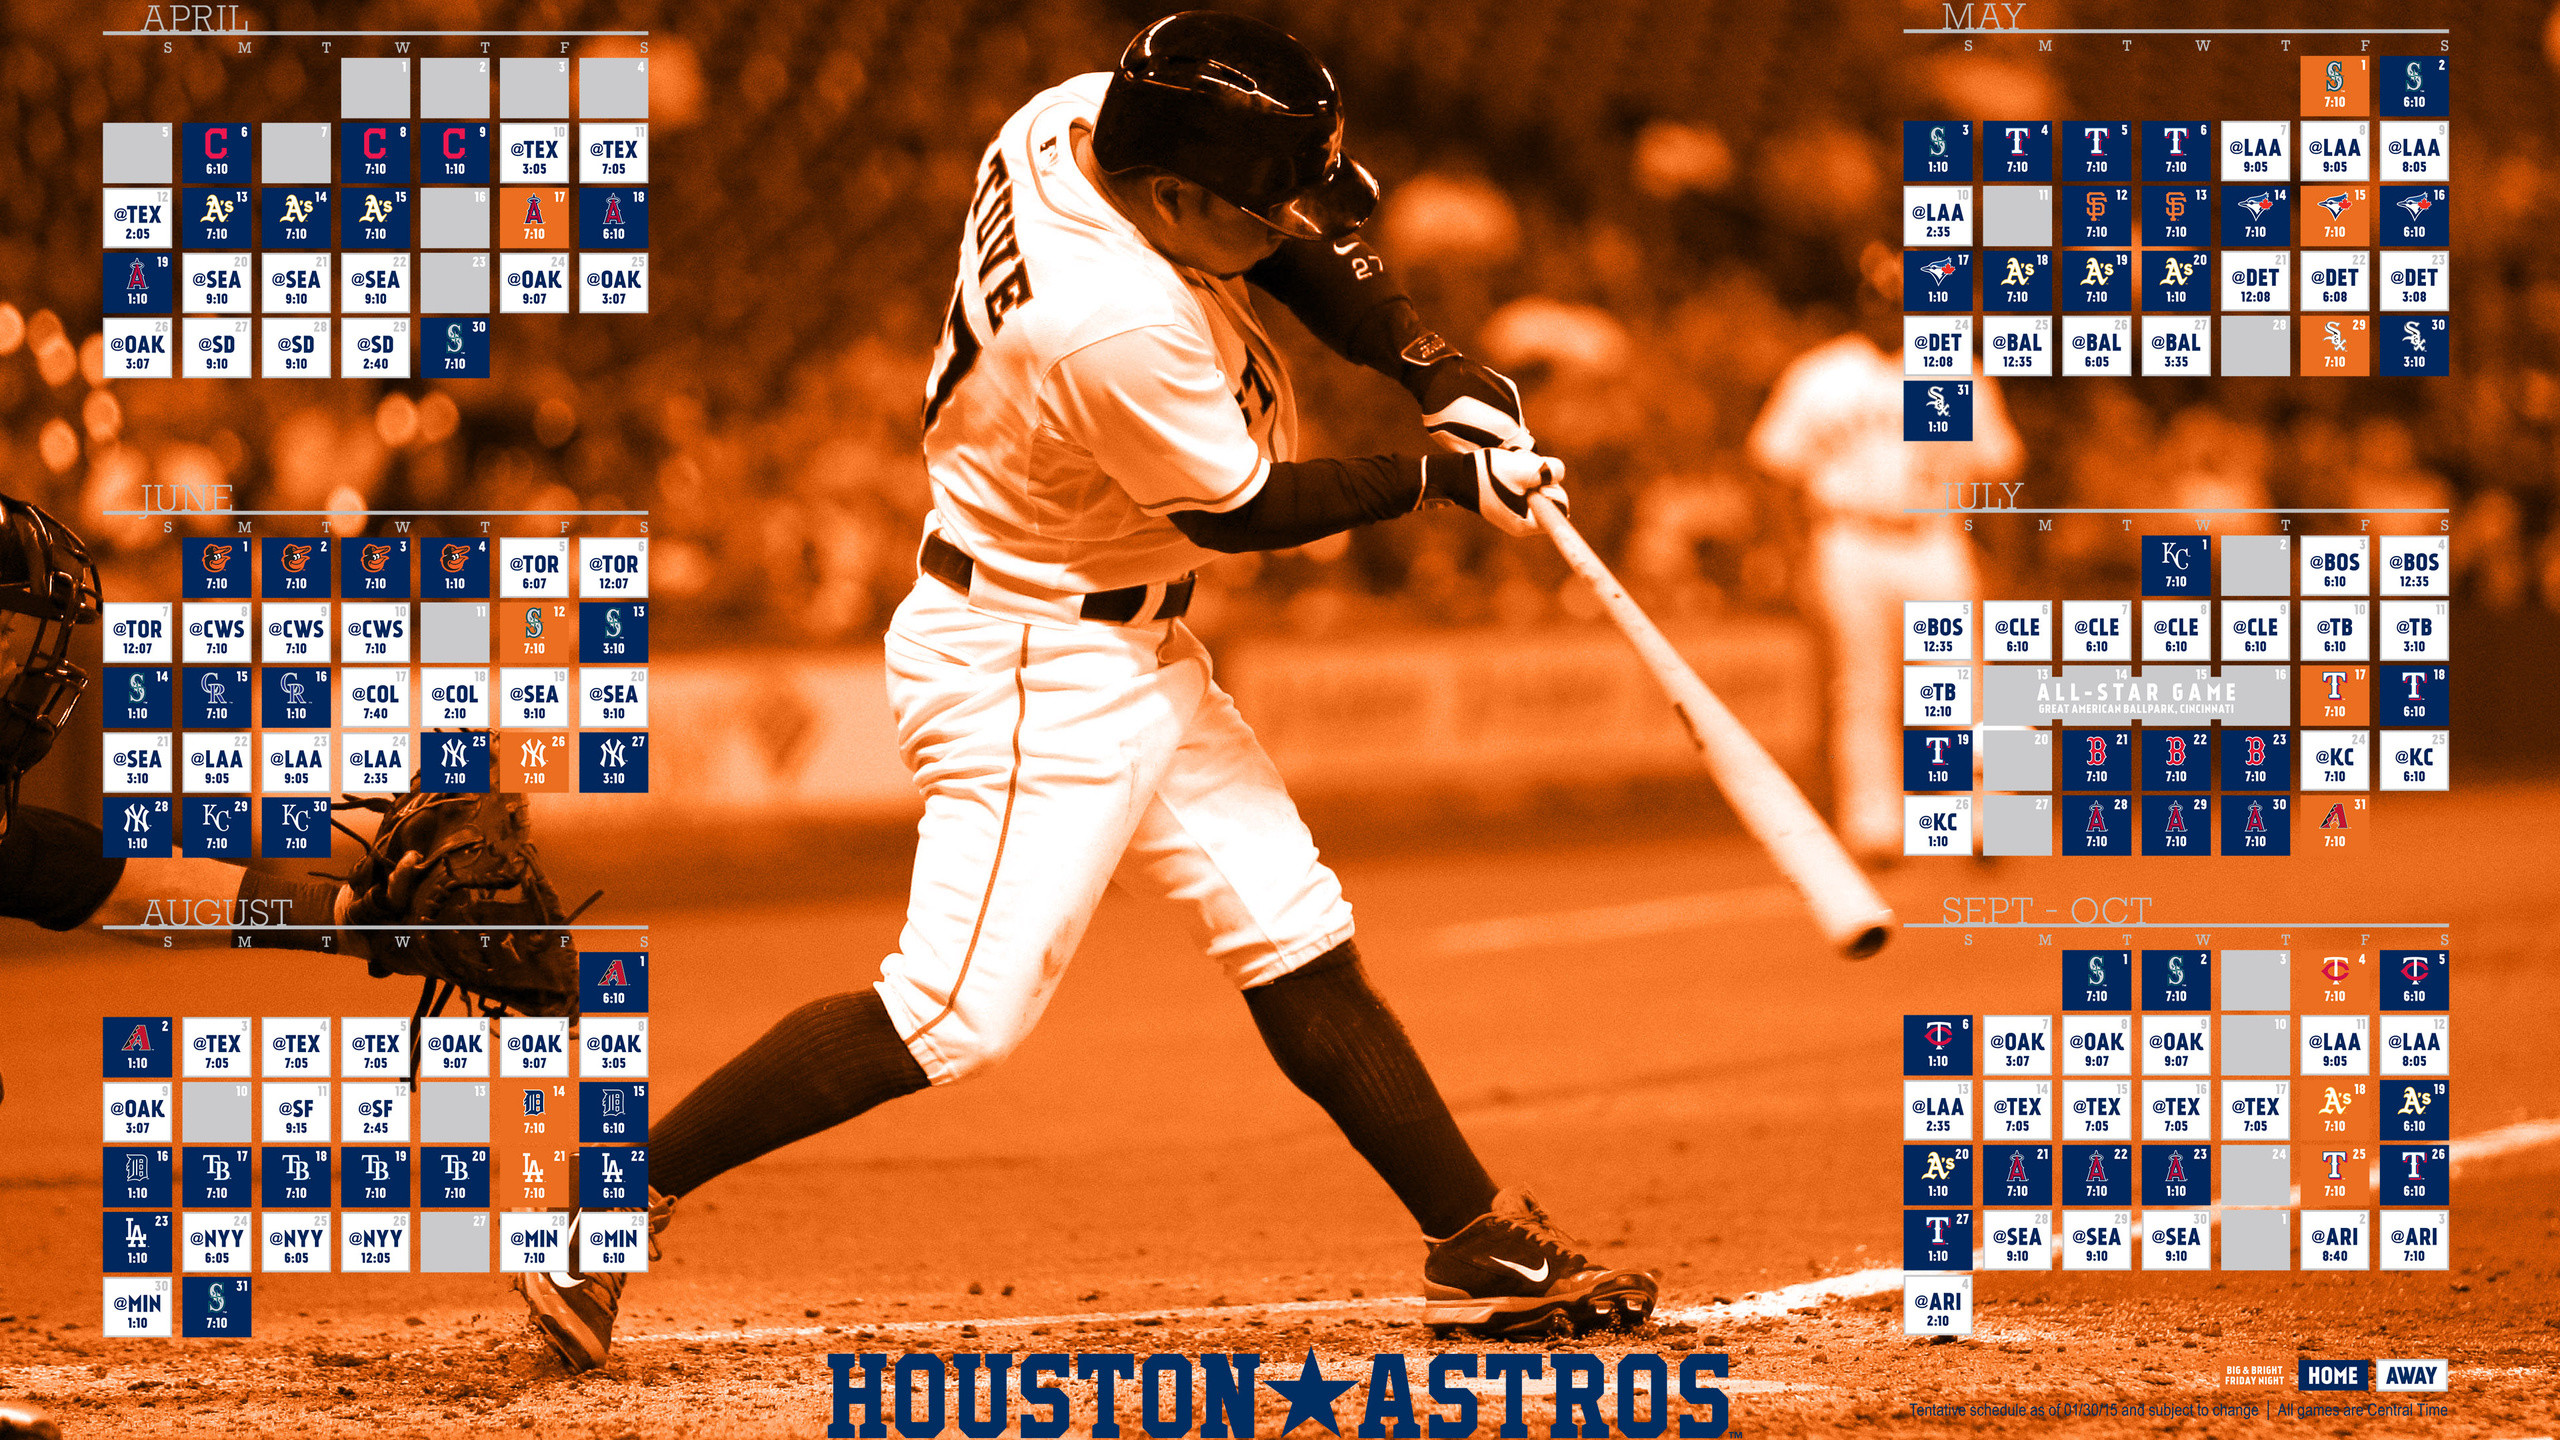 2560x1440 Pitcher, Sports, Mlb, Houston Astros Mlb Schedule 2015, Houston Astros